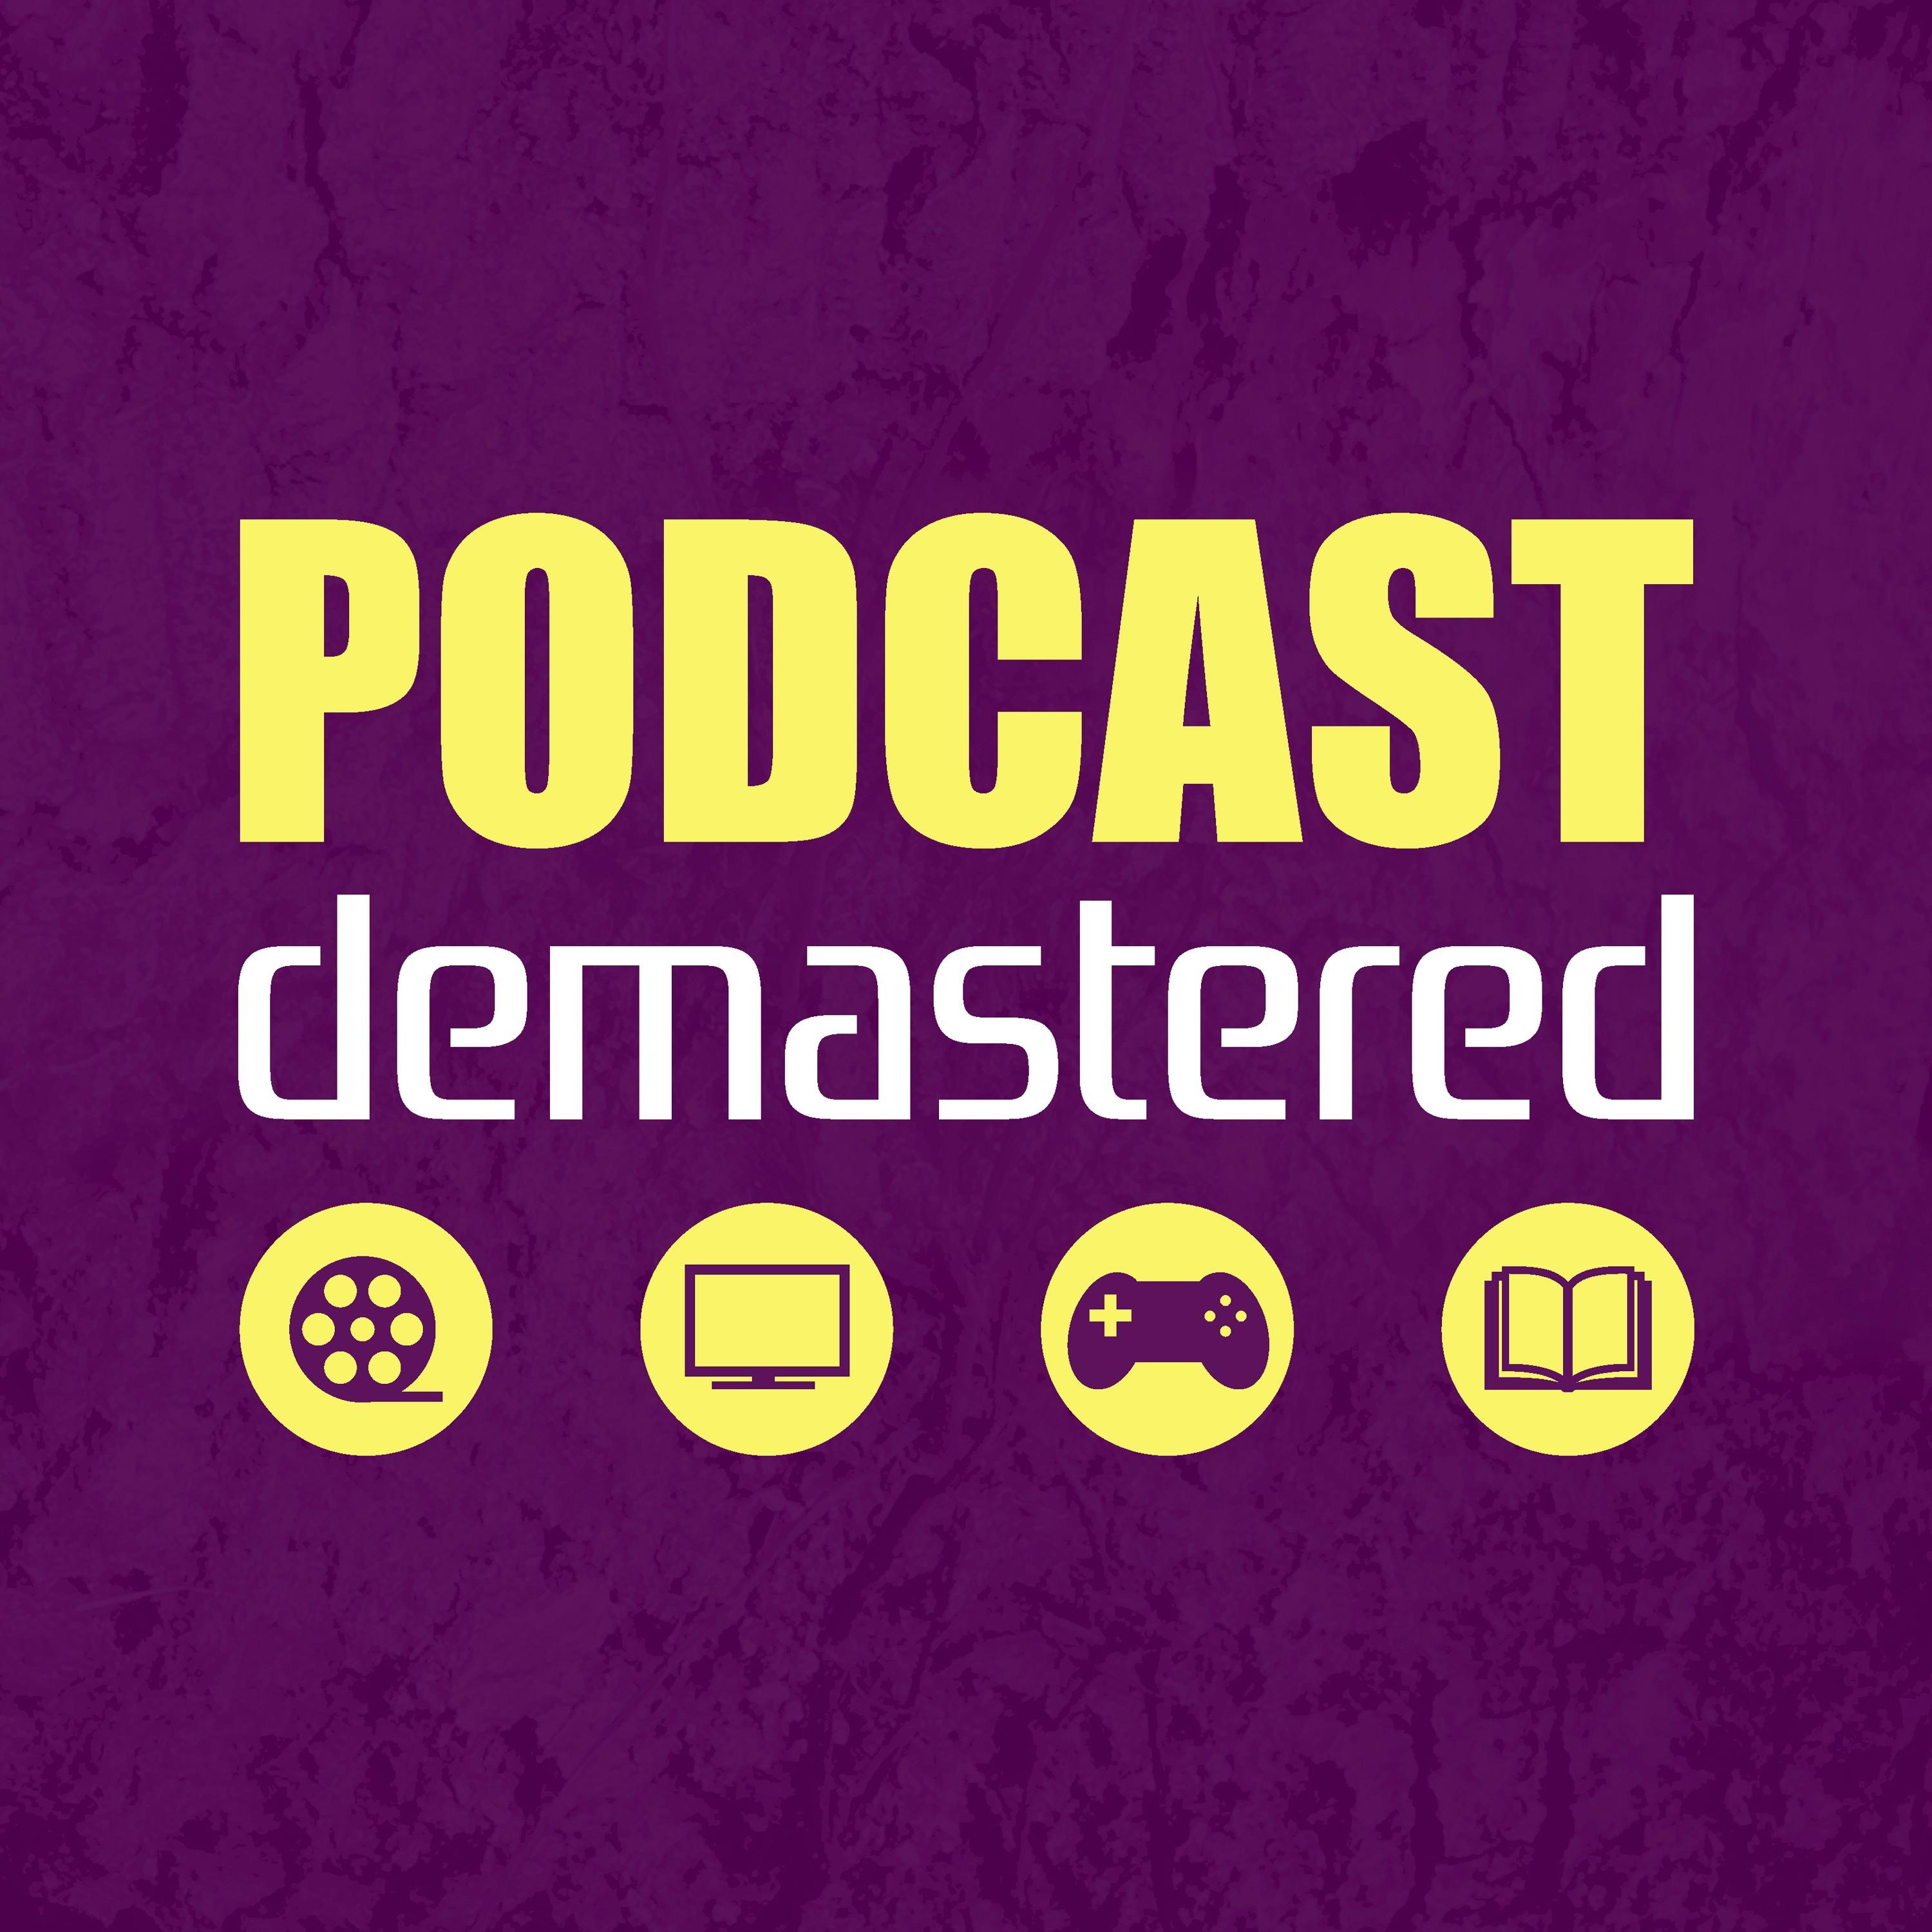 Podcast Demastered